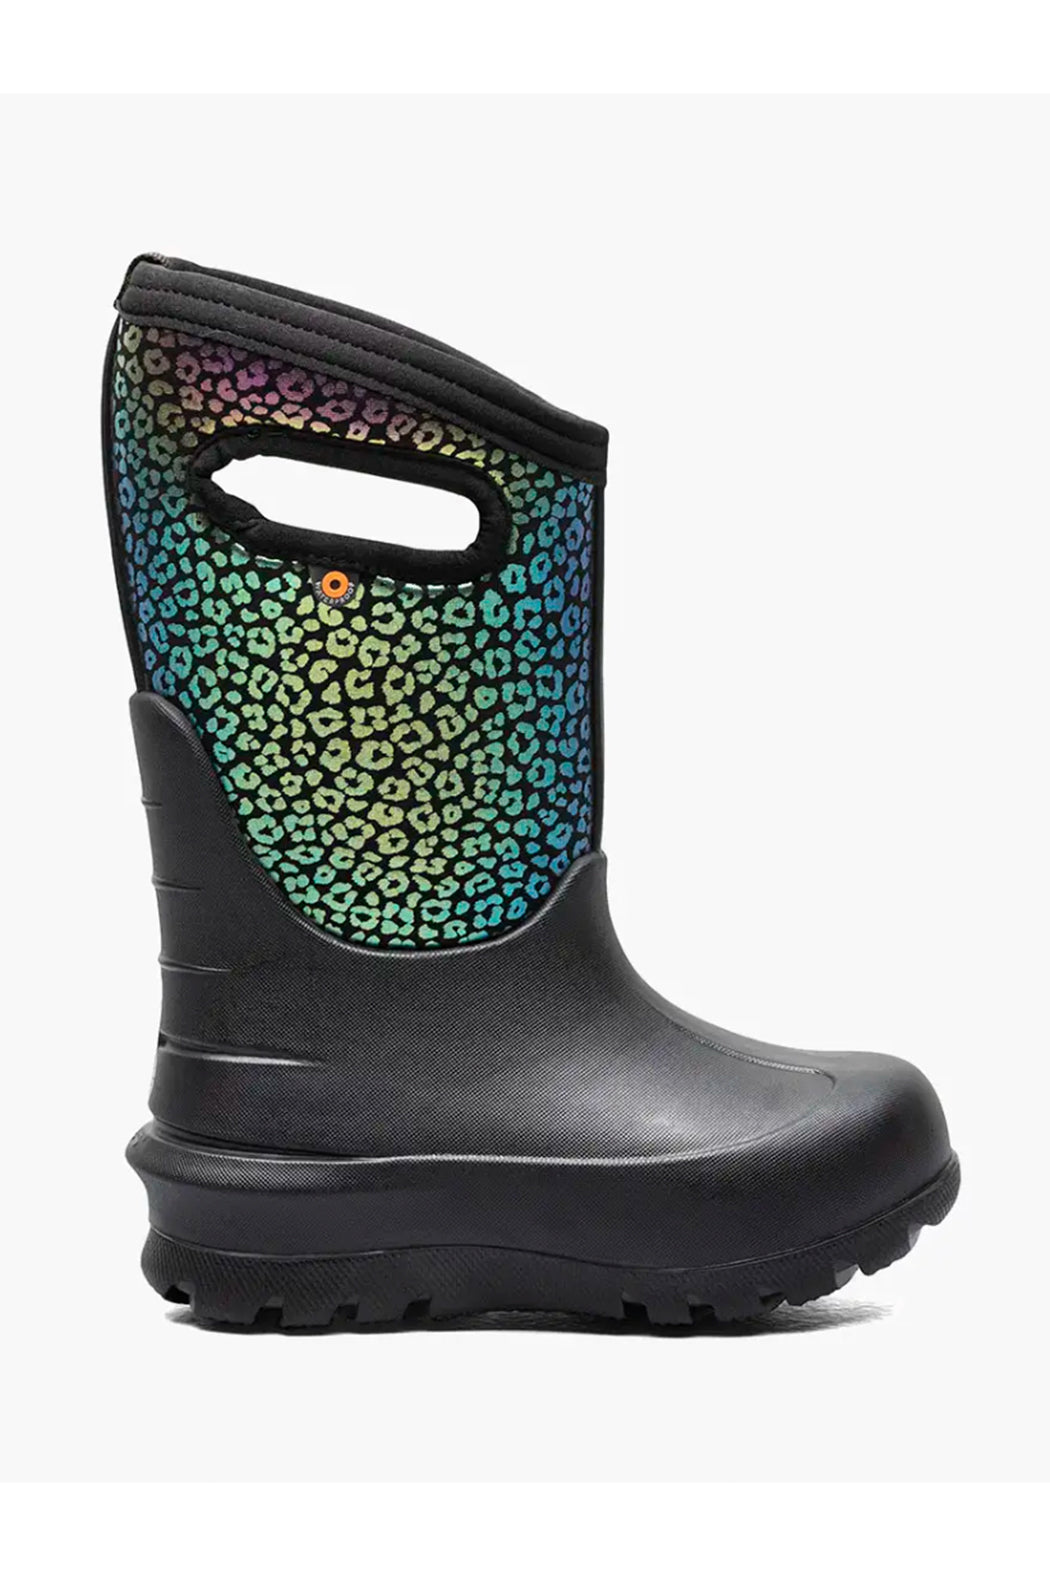 BOGS Neo-Classic Winter Boots: Rainbow Leopard